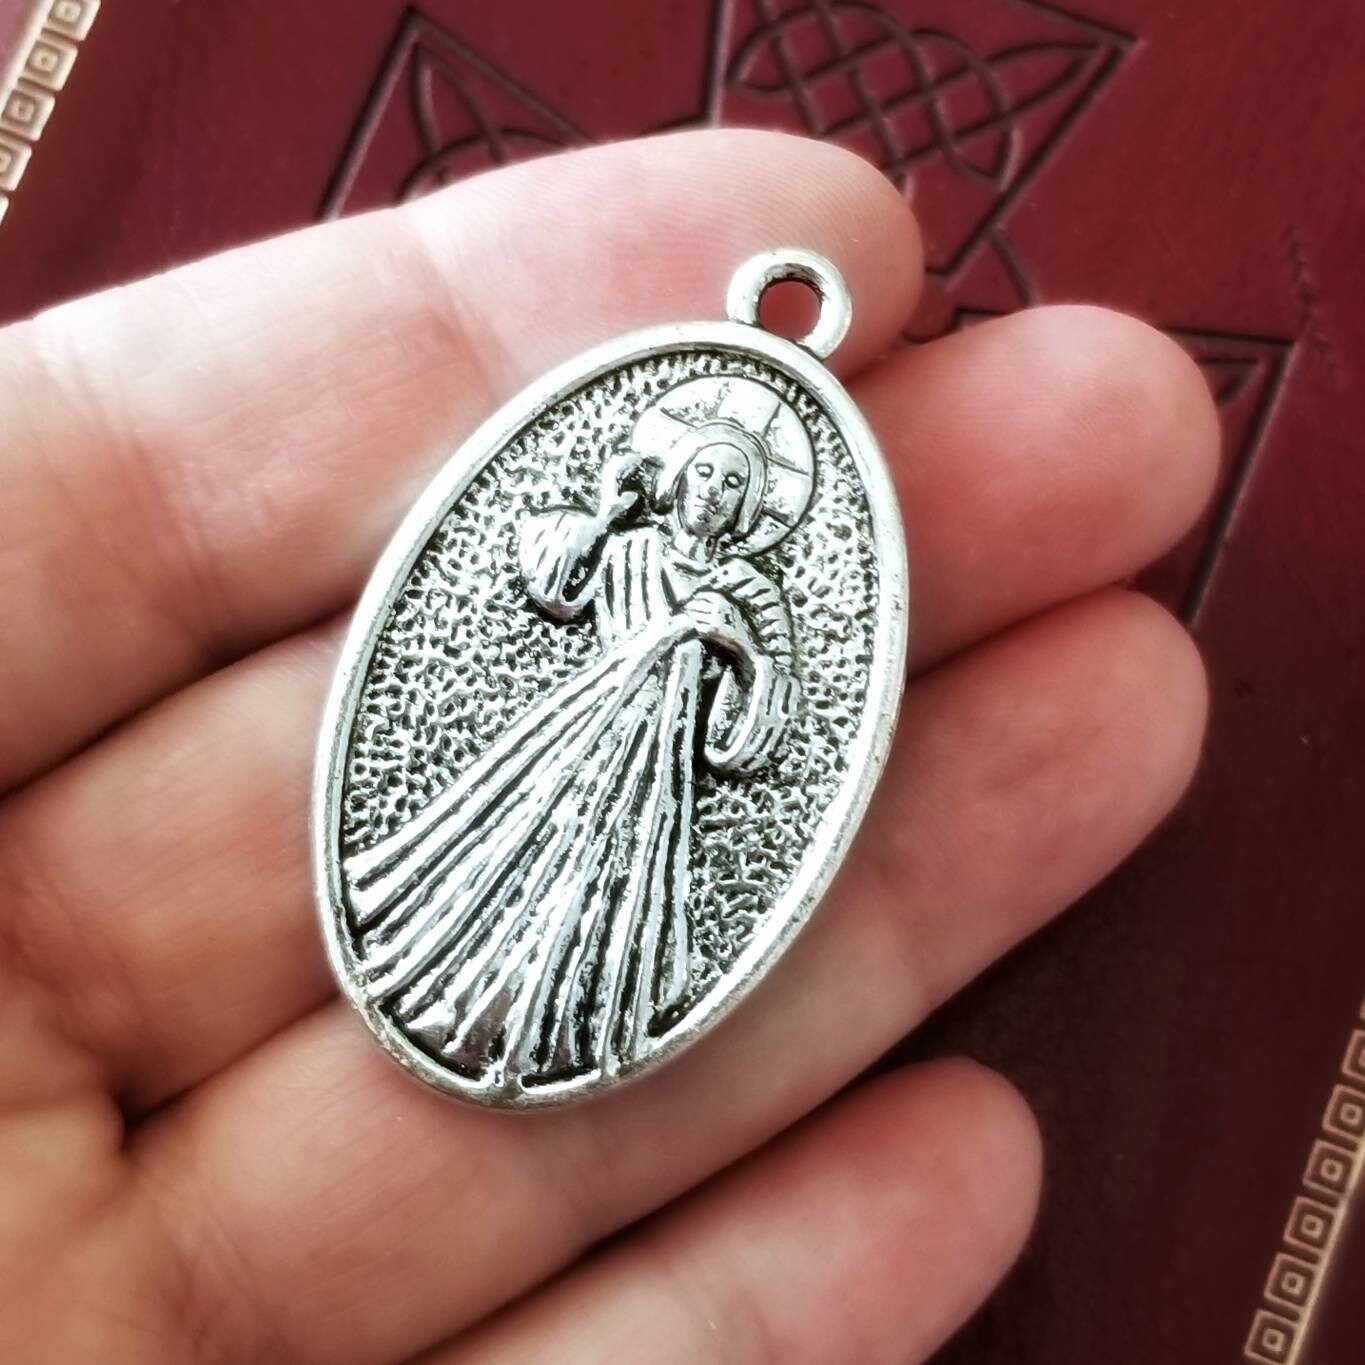 Divine Mercy Gold Tone Medal Pendant Black String Necklace Collar Divina  Misericordia Catholic Gift